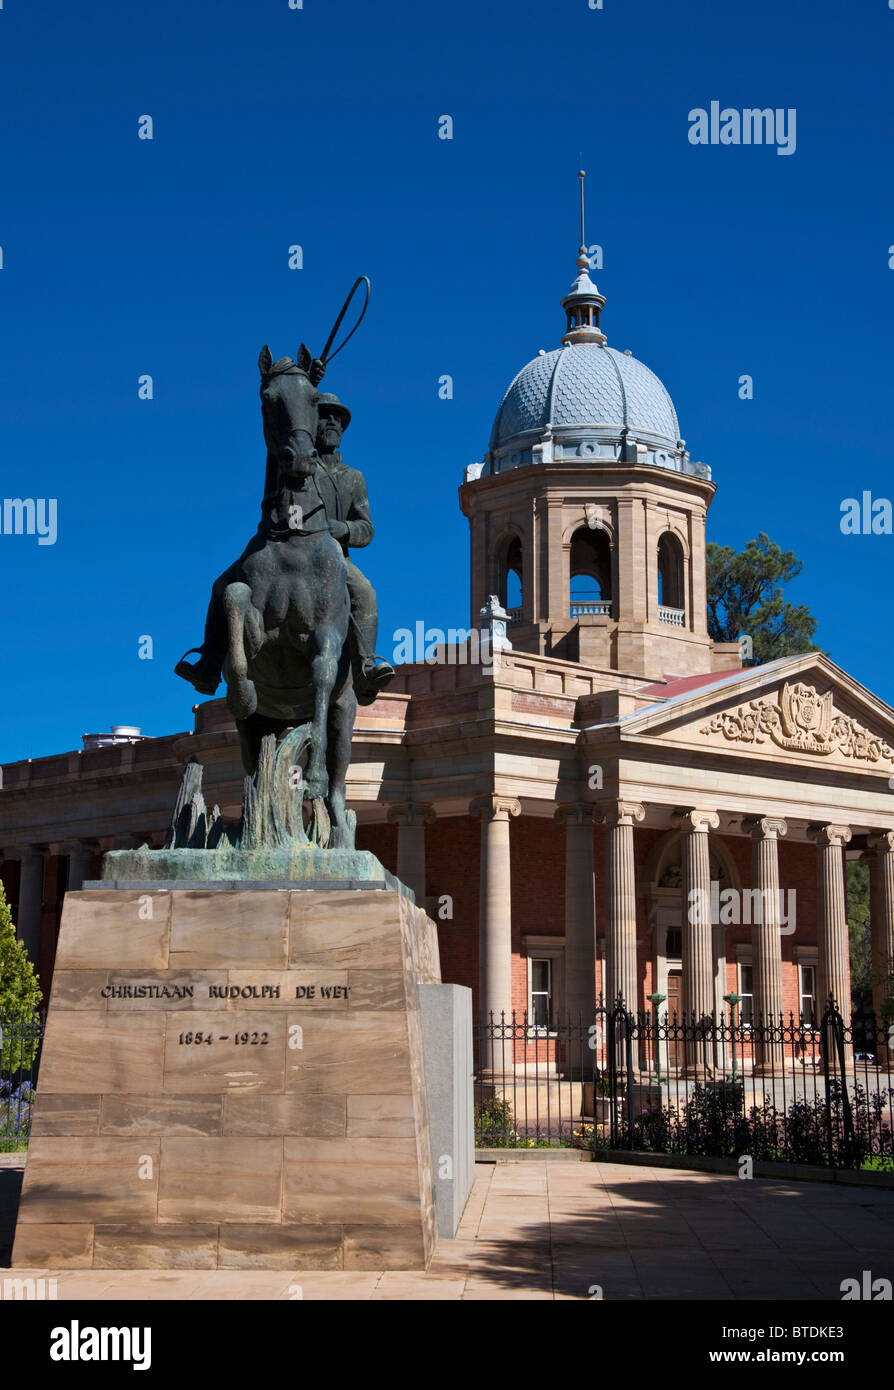 Statua di Christiaan Rudolph de Wet, un famoso Boer leader, al quarto Raadsaal monumento di Bloemfontein Foto Stock